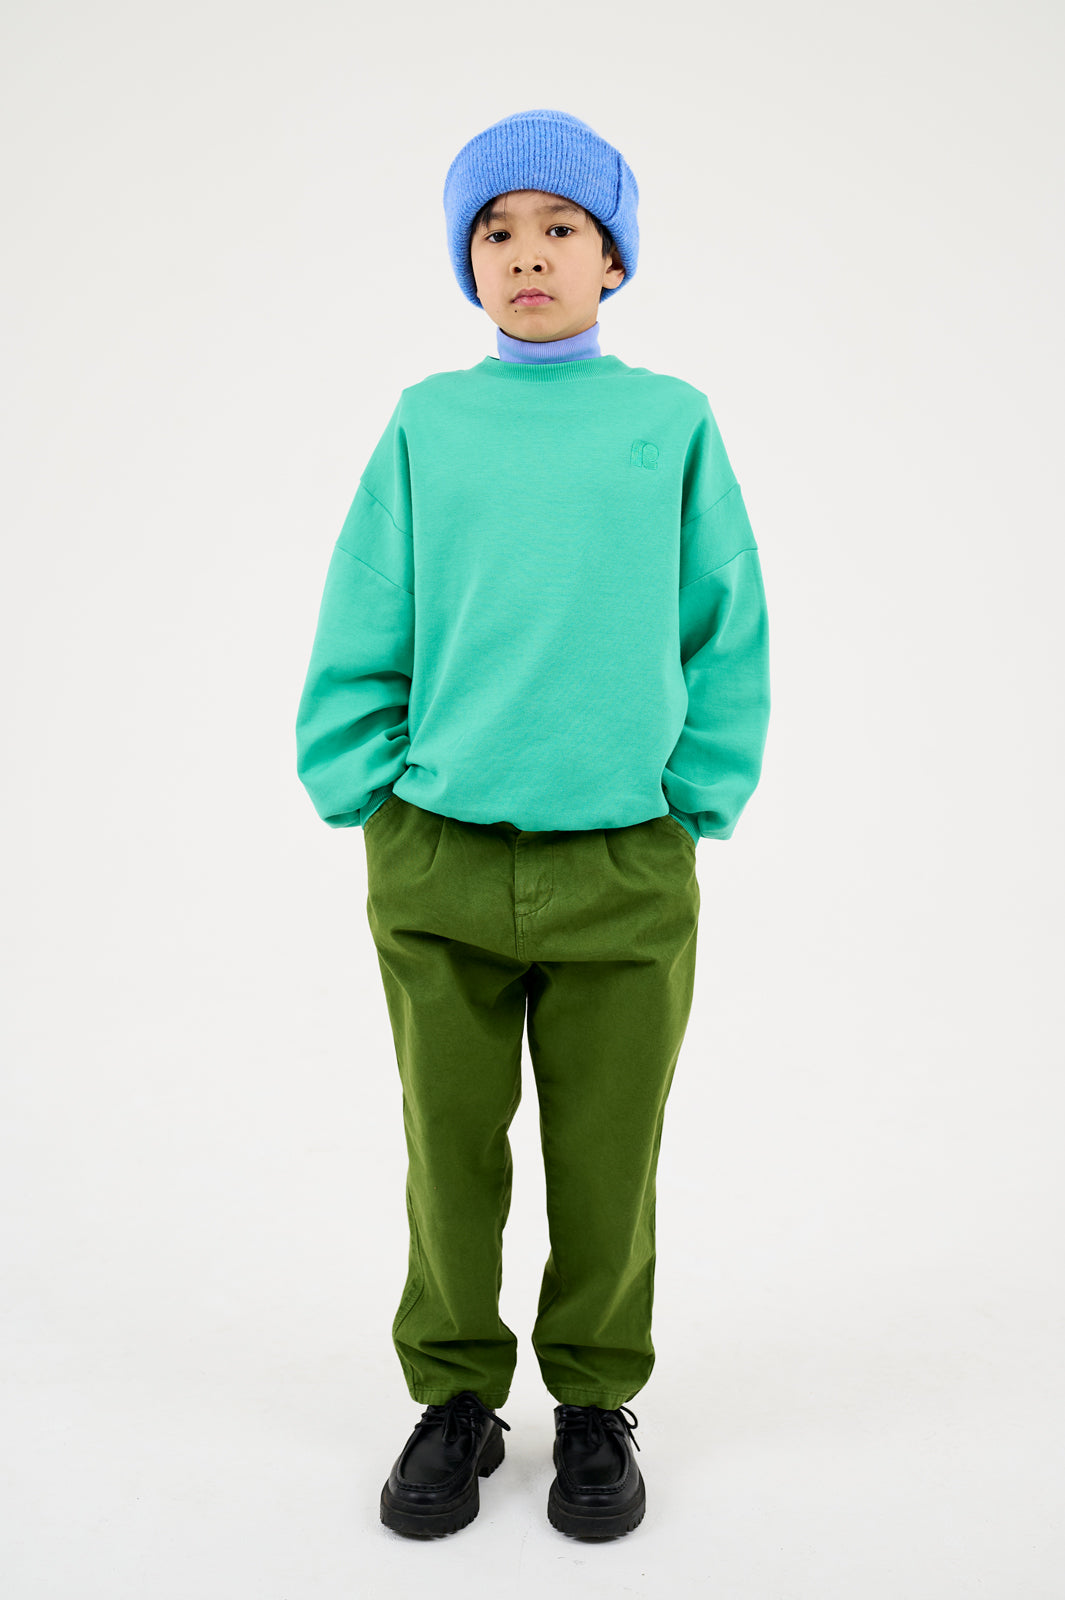 crewneck sweater - brilliant green